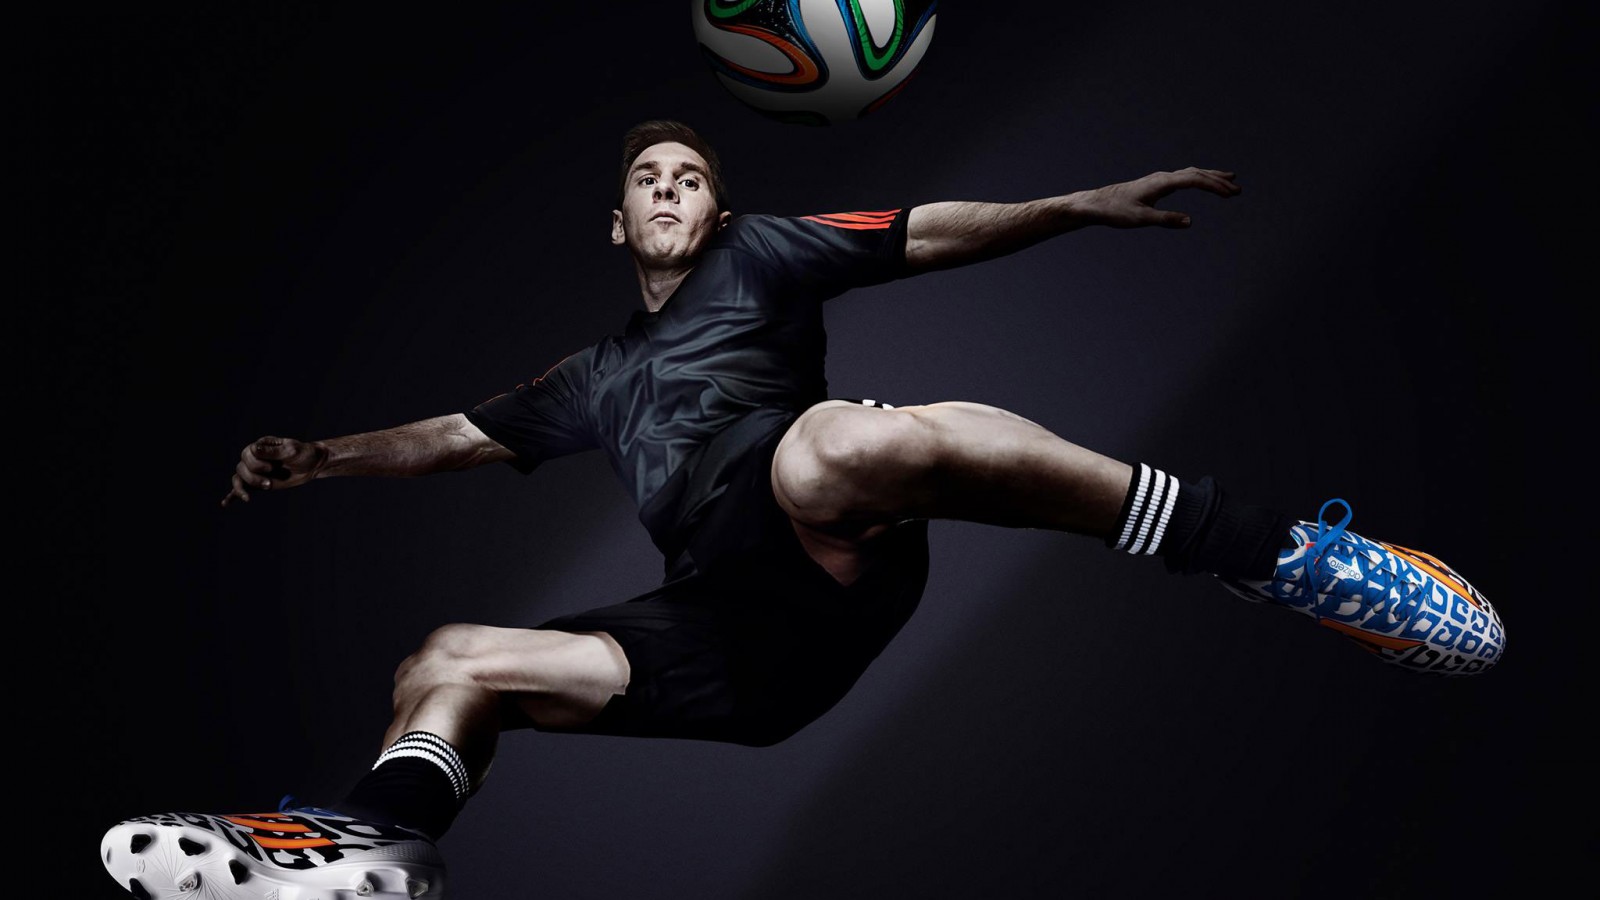 Leo Messi Adidas Hd Wallpaper Image Wallpapers